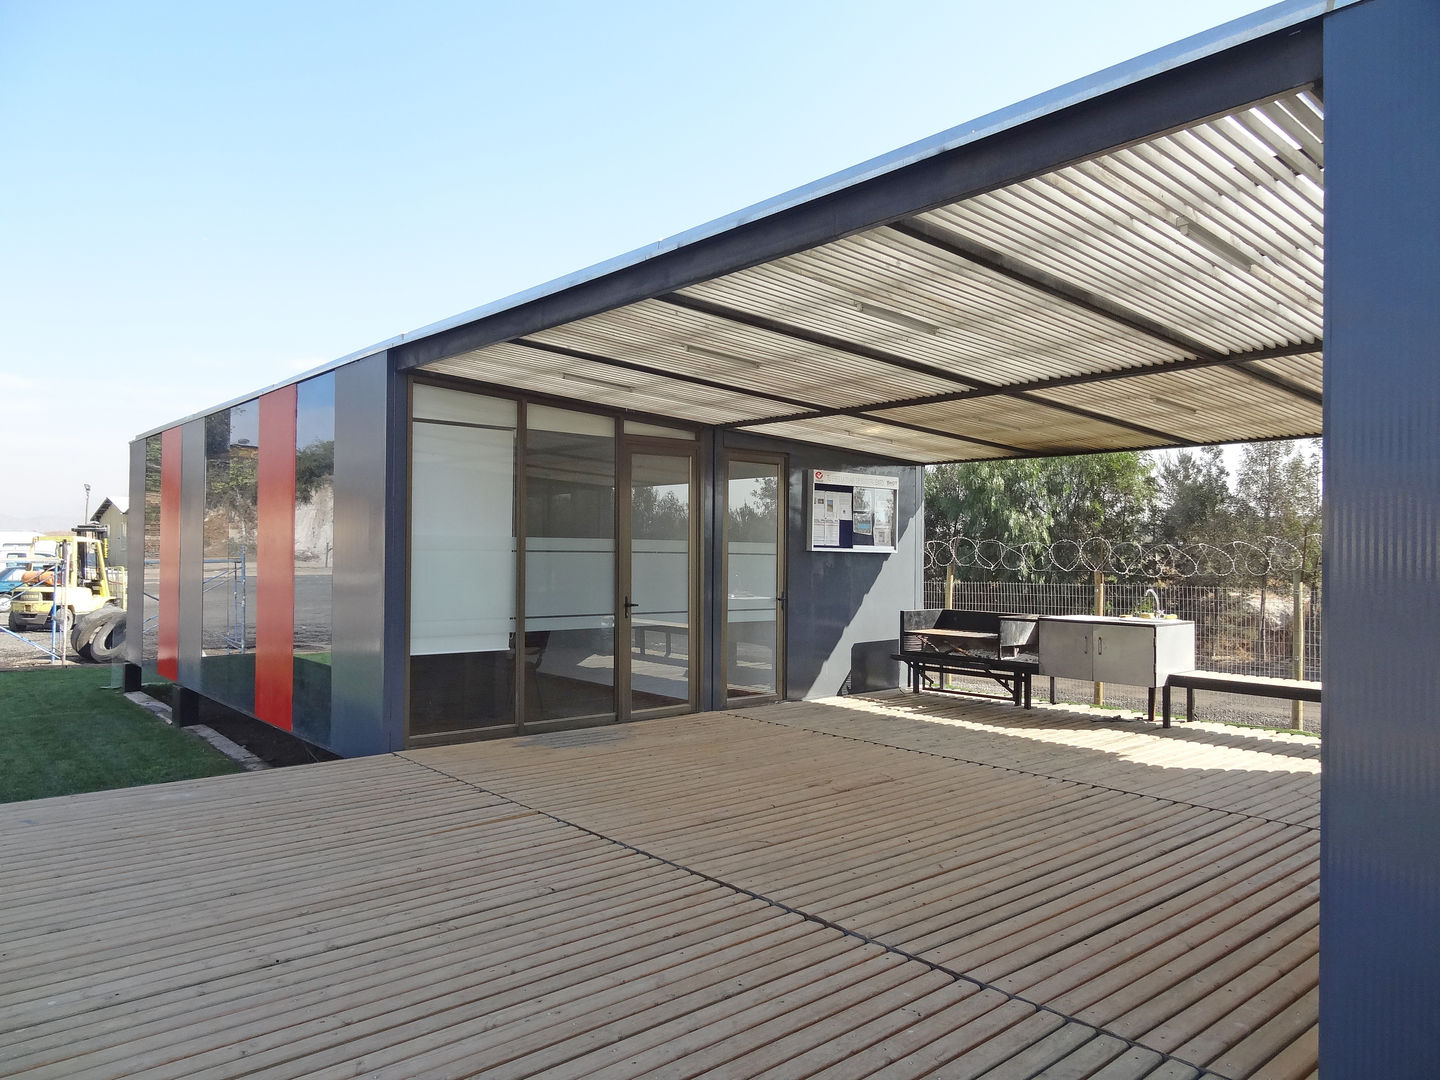 Oficinas Modulares Transportables, m2 estudio arquitectos - Santiago m2 estudio arquitectos - Santiago บันได